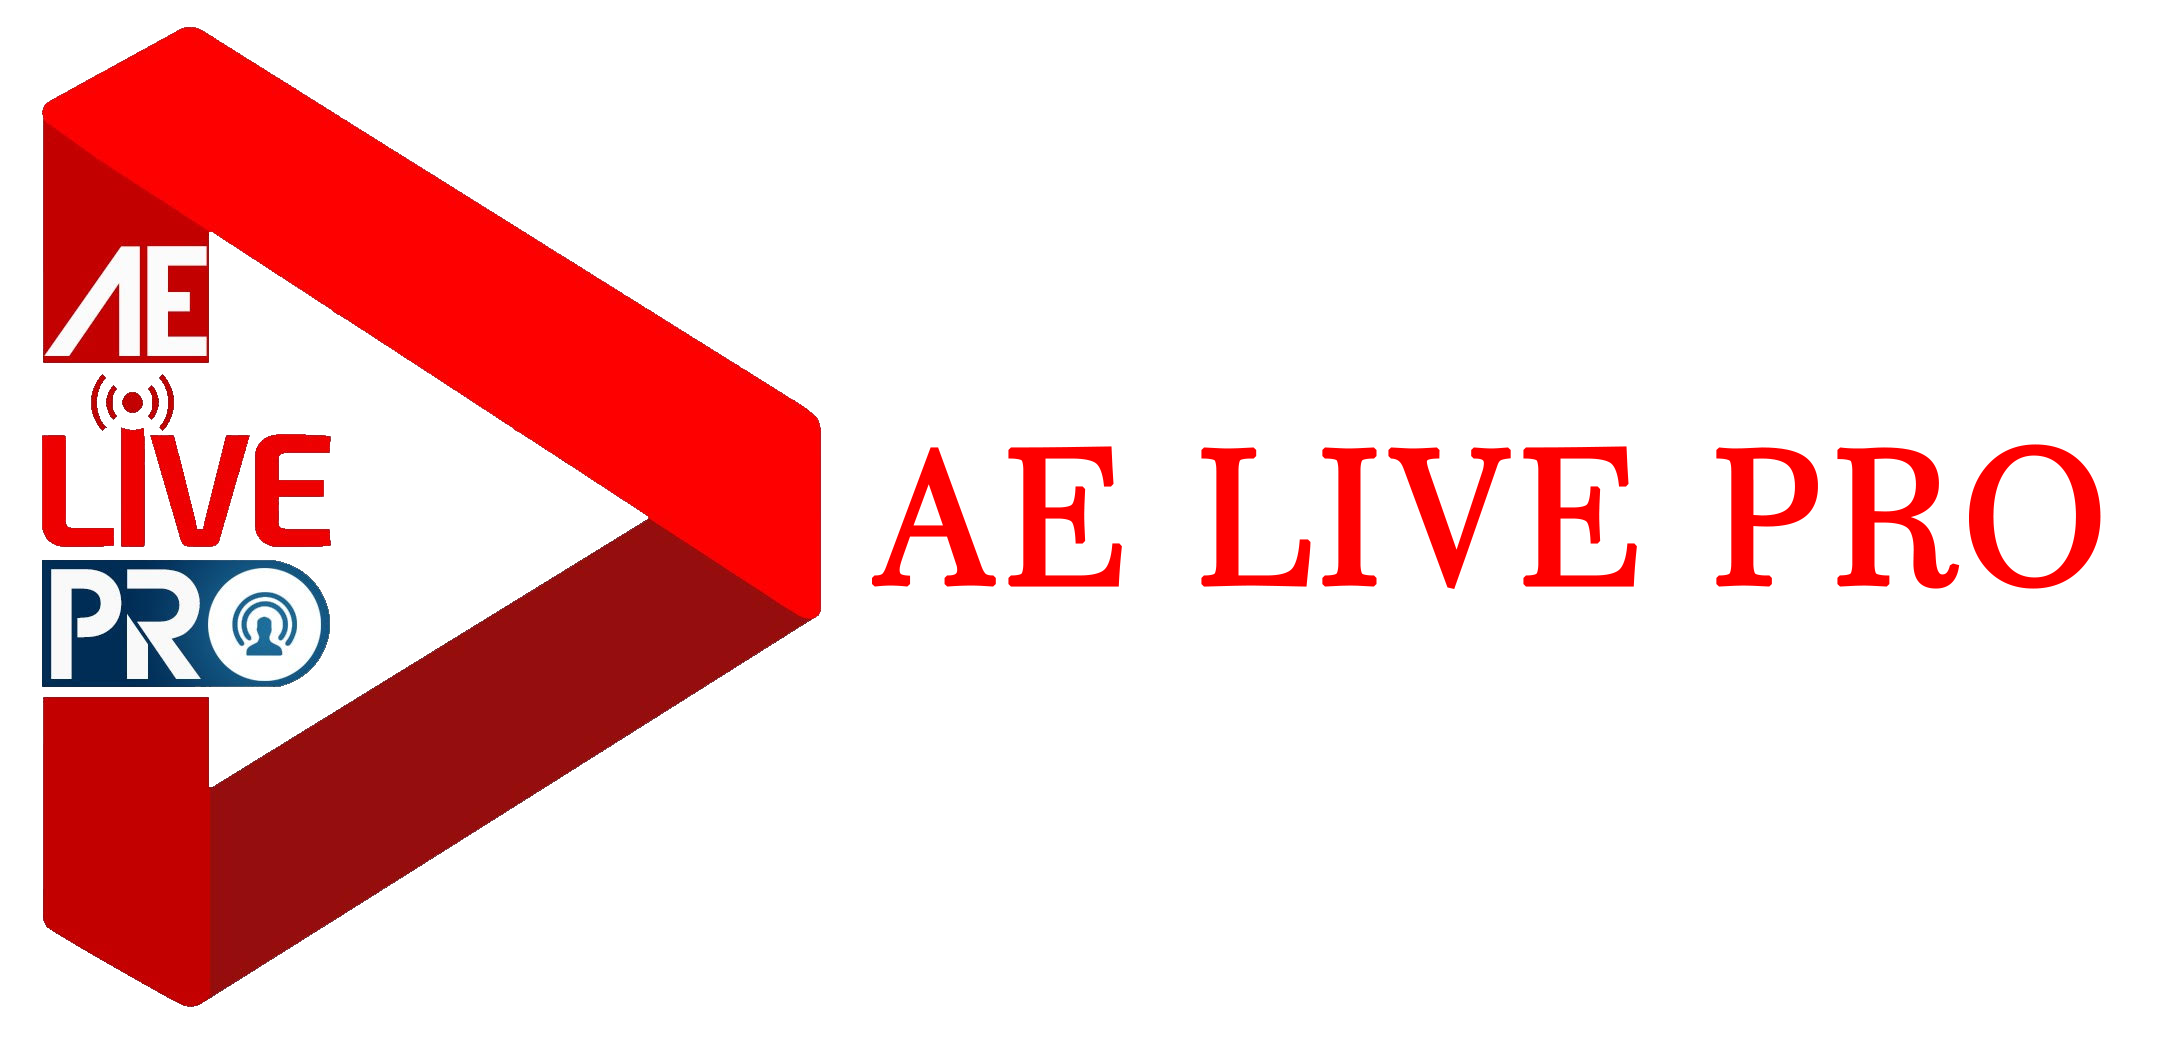 AE LIVE PRO